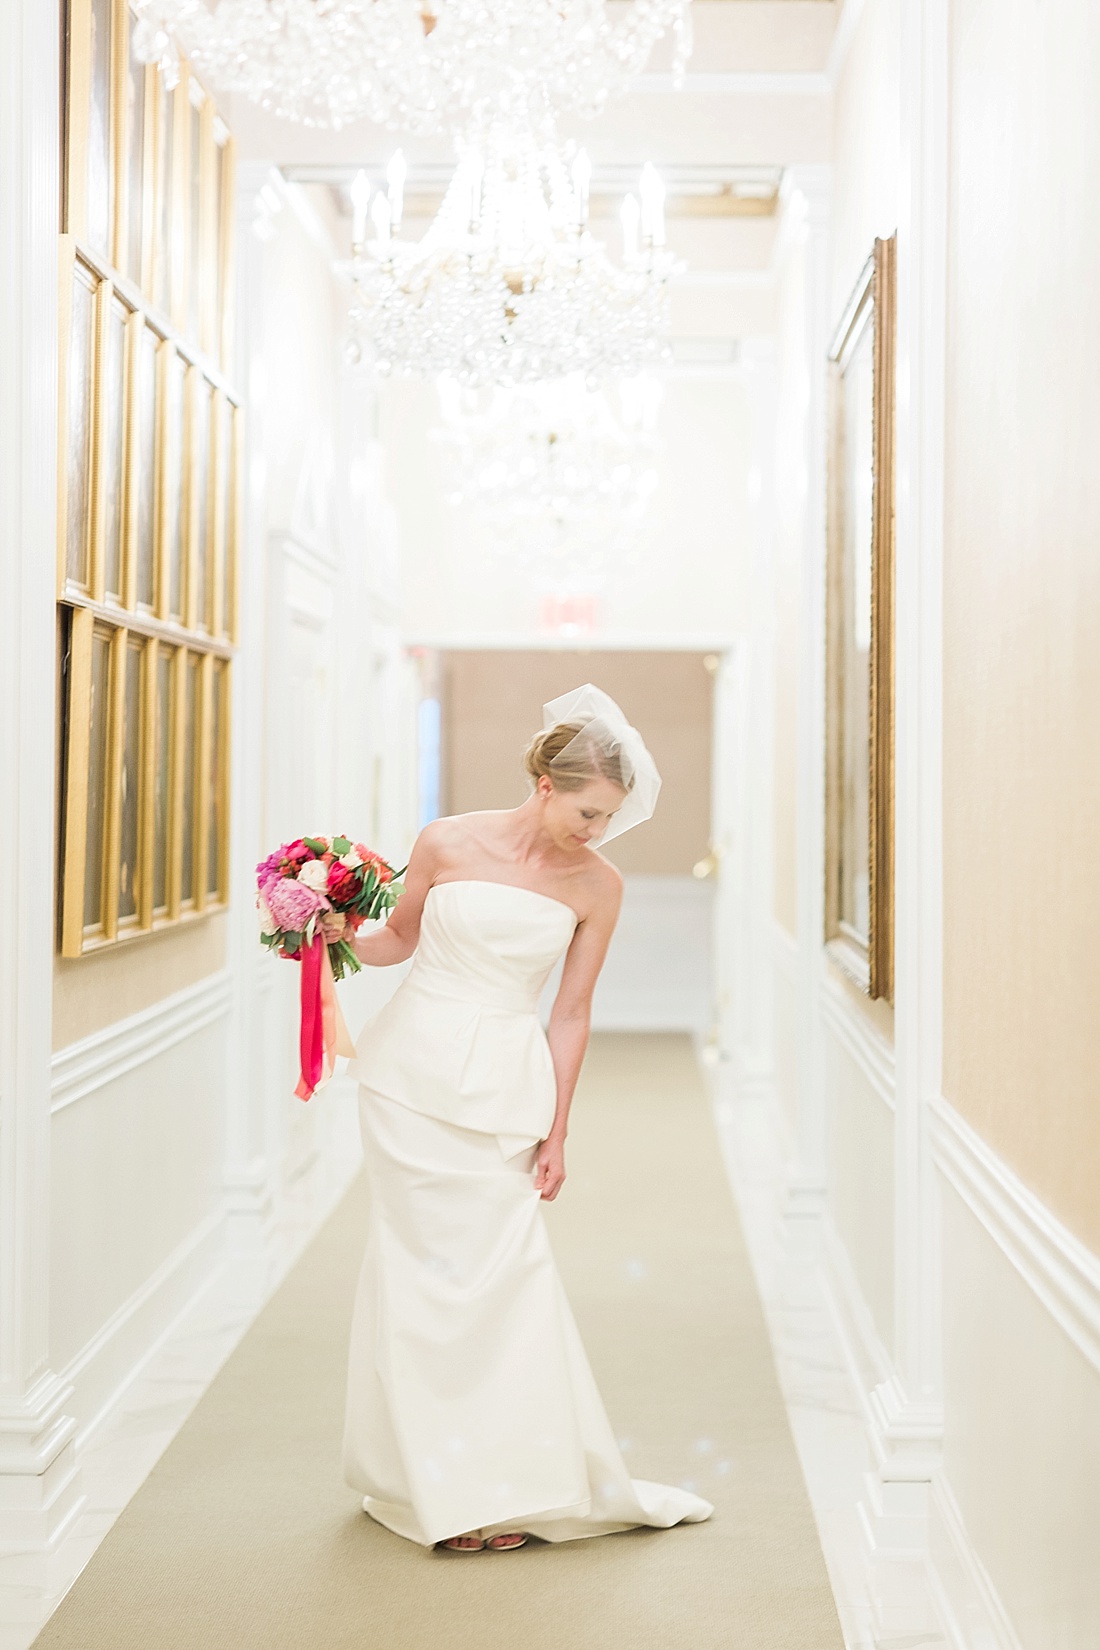 Peplum wedding dress + birdcage veil | DC wedding photographer Abby Grace